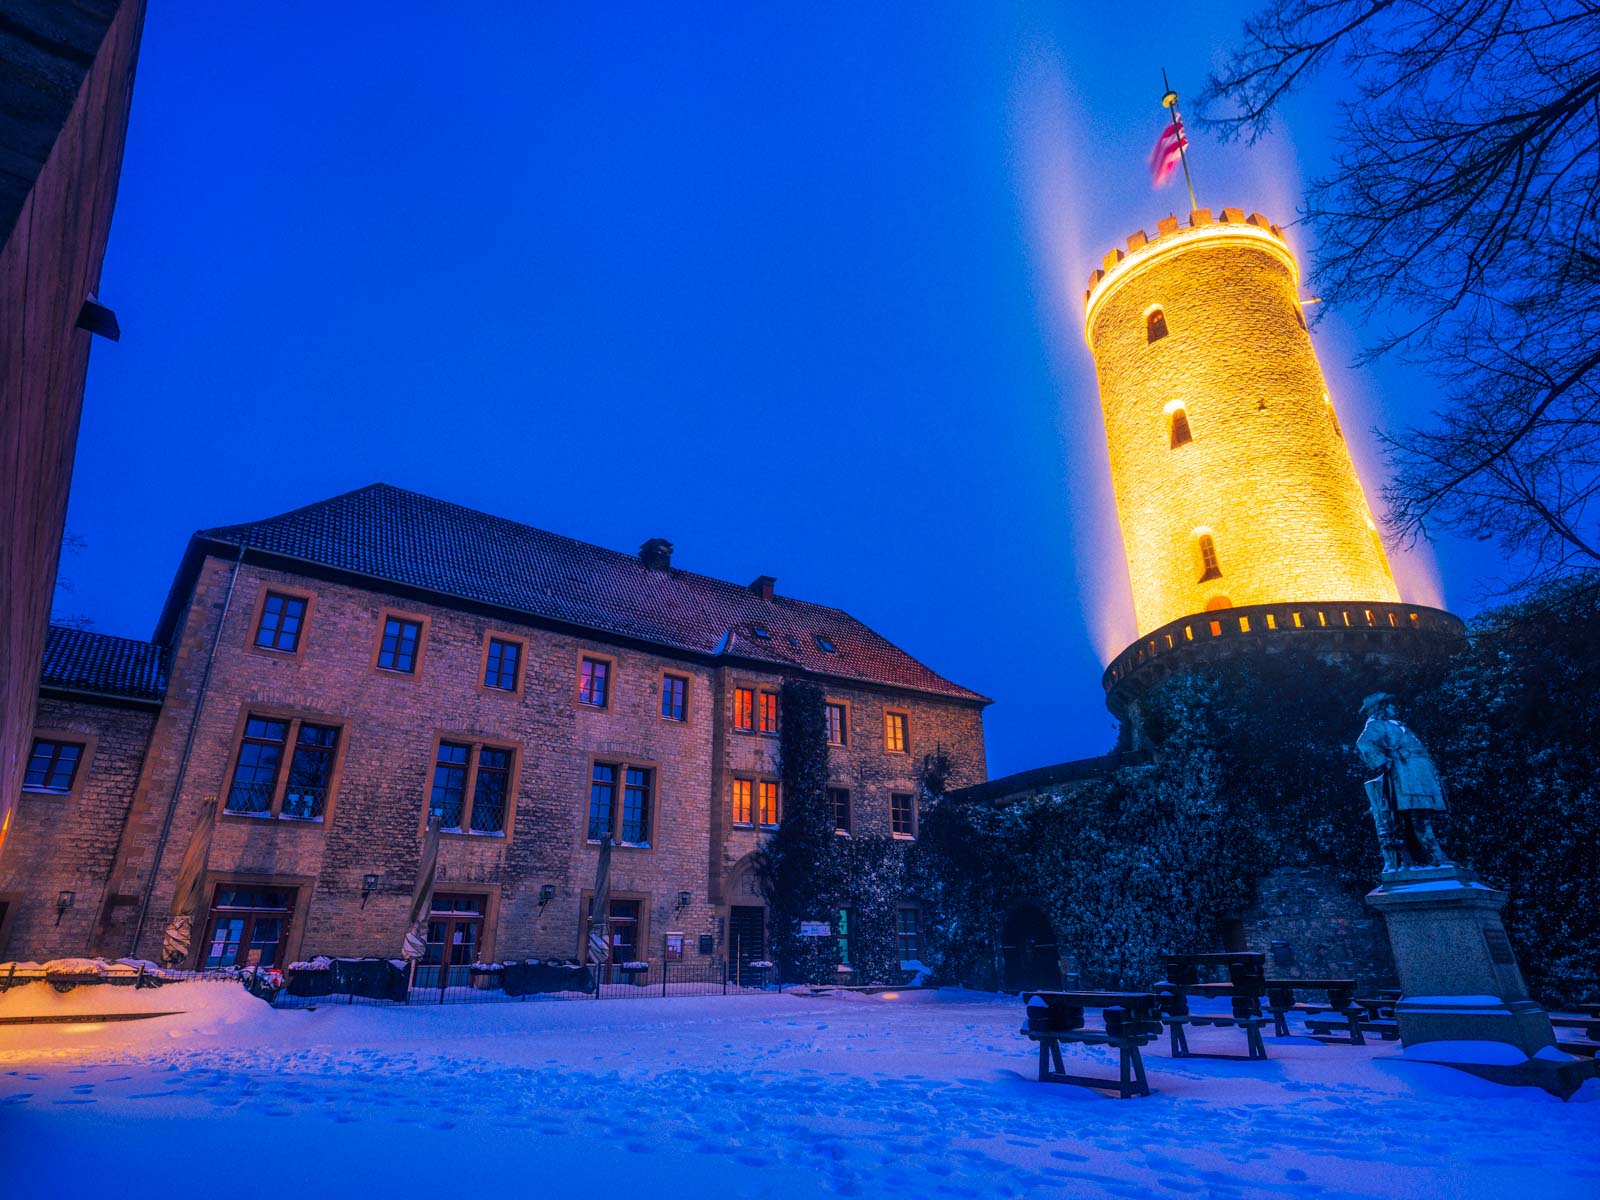 Castle tower in winter - 'Sparrenburg' Castle on 7 February 2021 (Bielefeld, Germany).